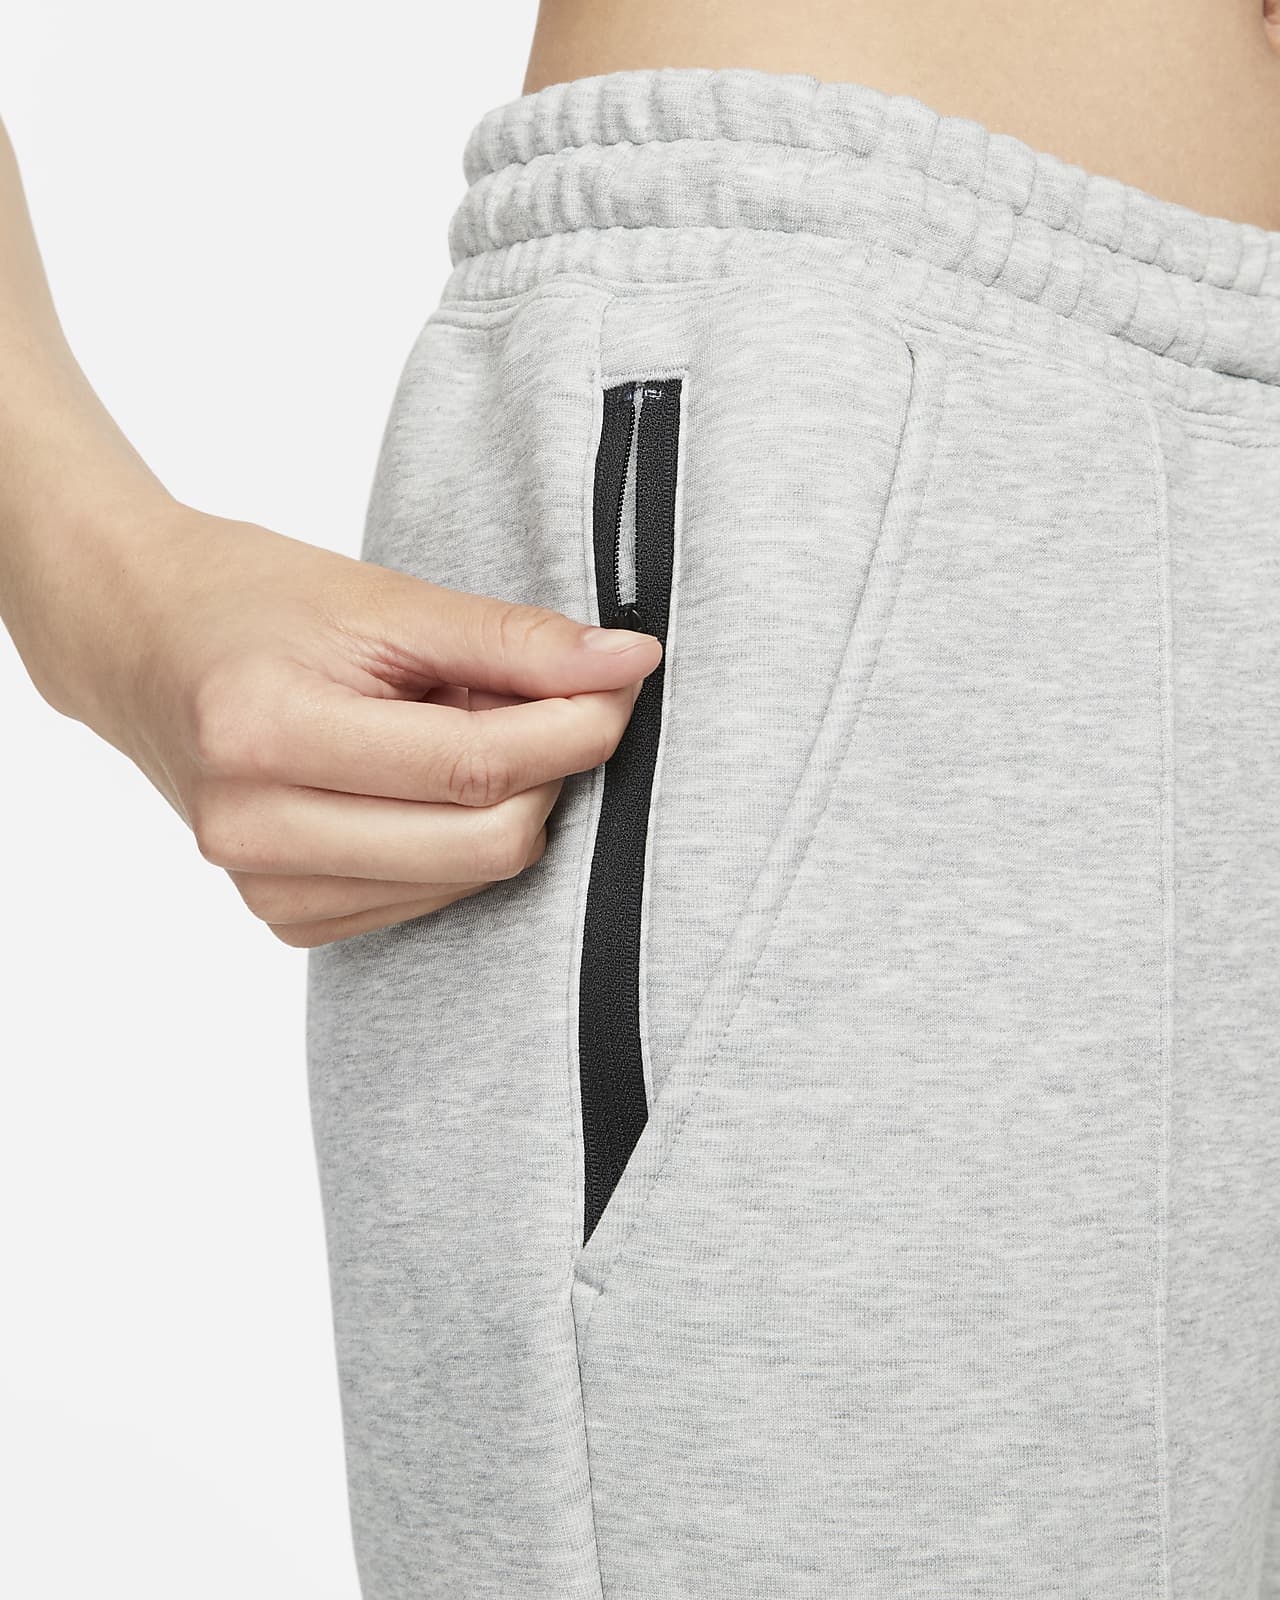 NIKE Sportswear Tech Fleece Women's Pants Carbon Heather/Black 803575-063  (Size XL), Pants -  Canada